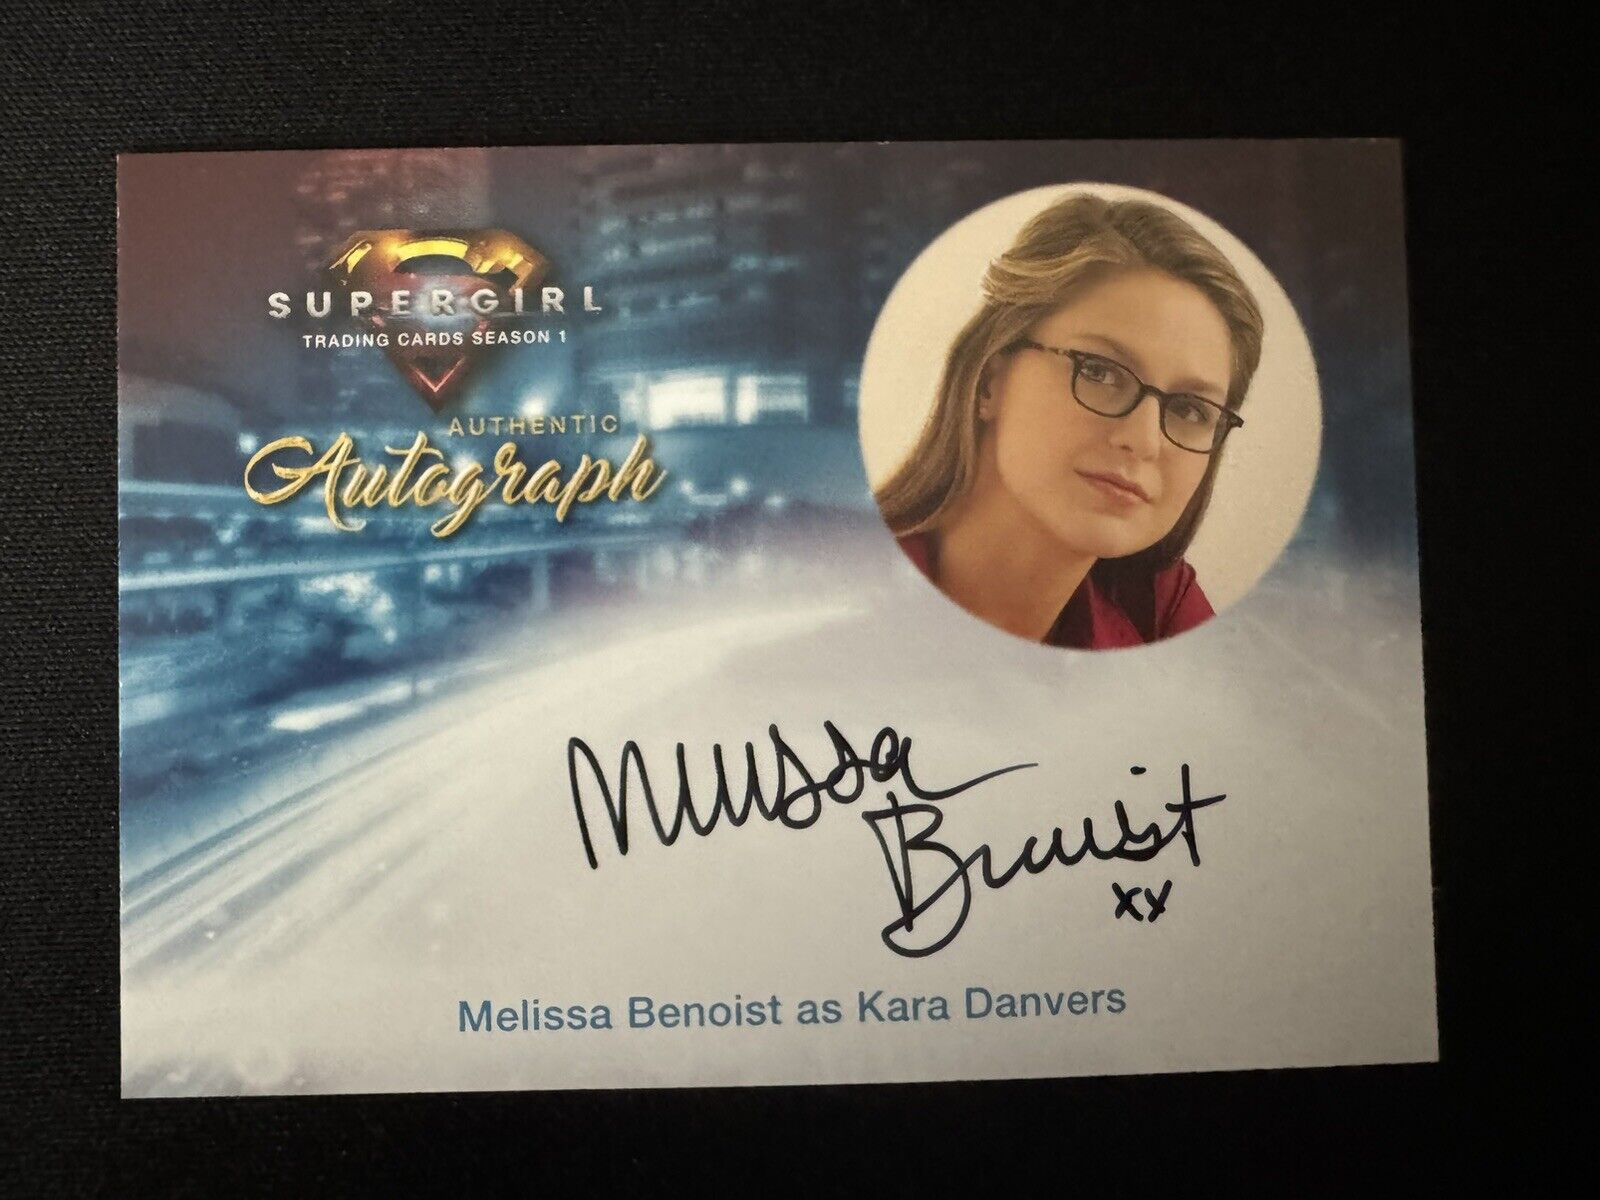 Supergirl Season 1 MB1 Autograph Card of Melissa Benoist as Kara Danvers